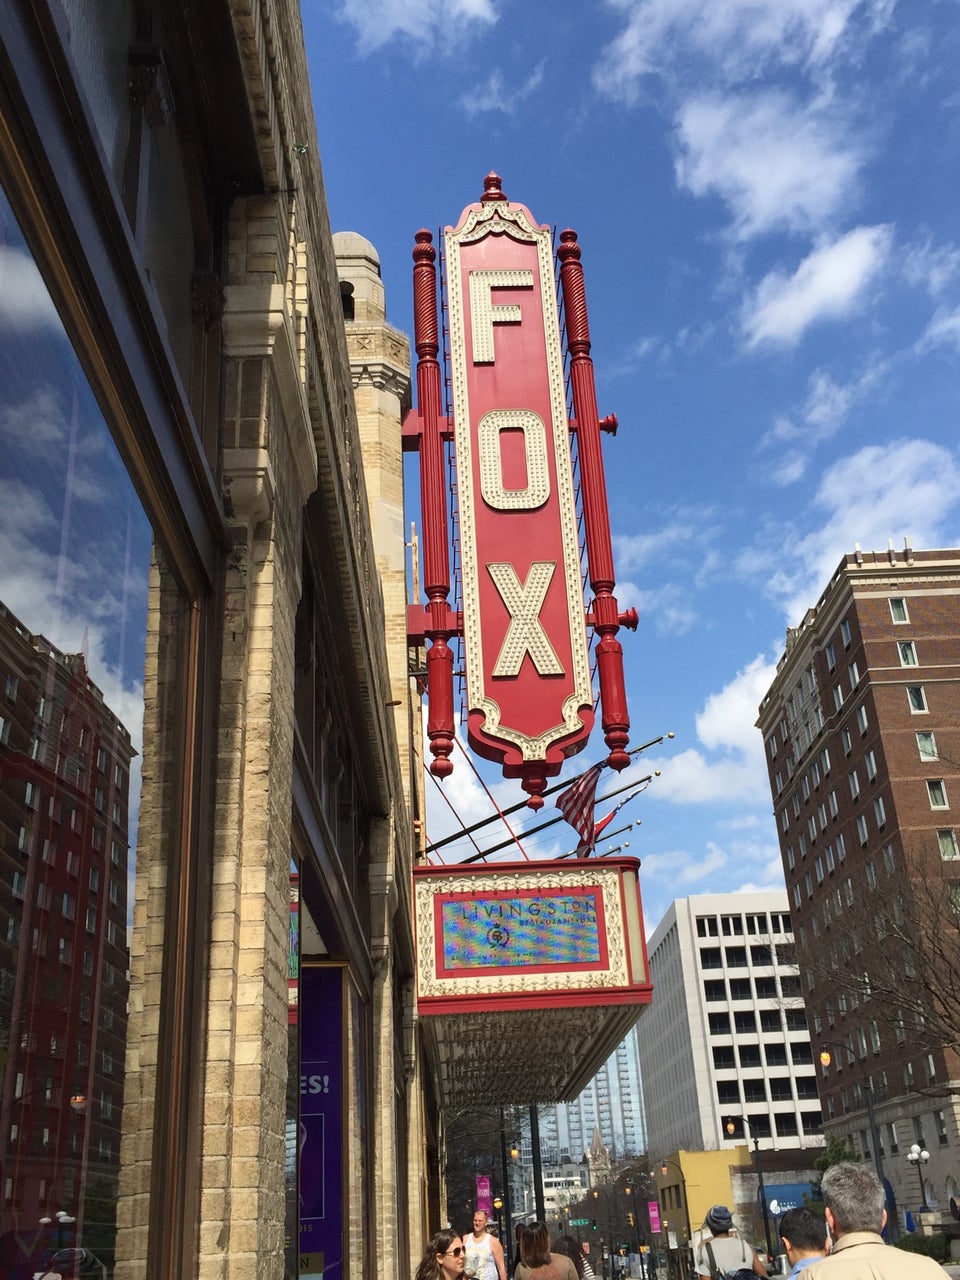 Photo of The Fox Theatre